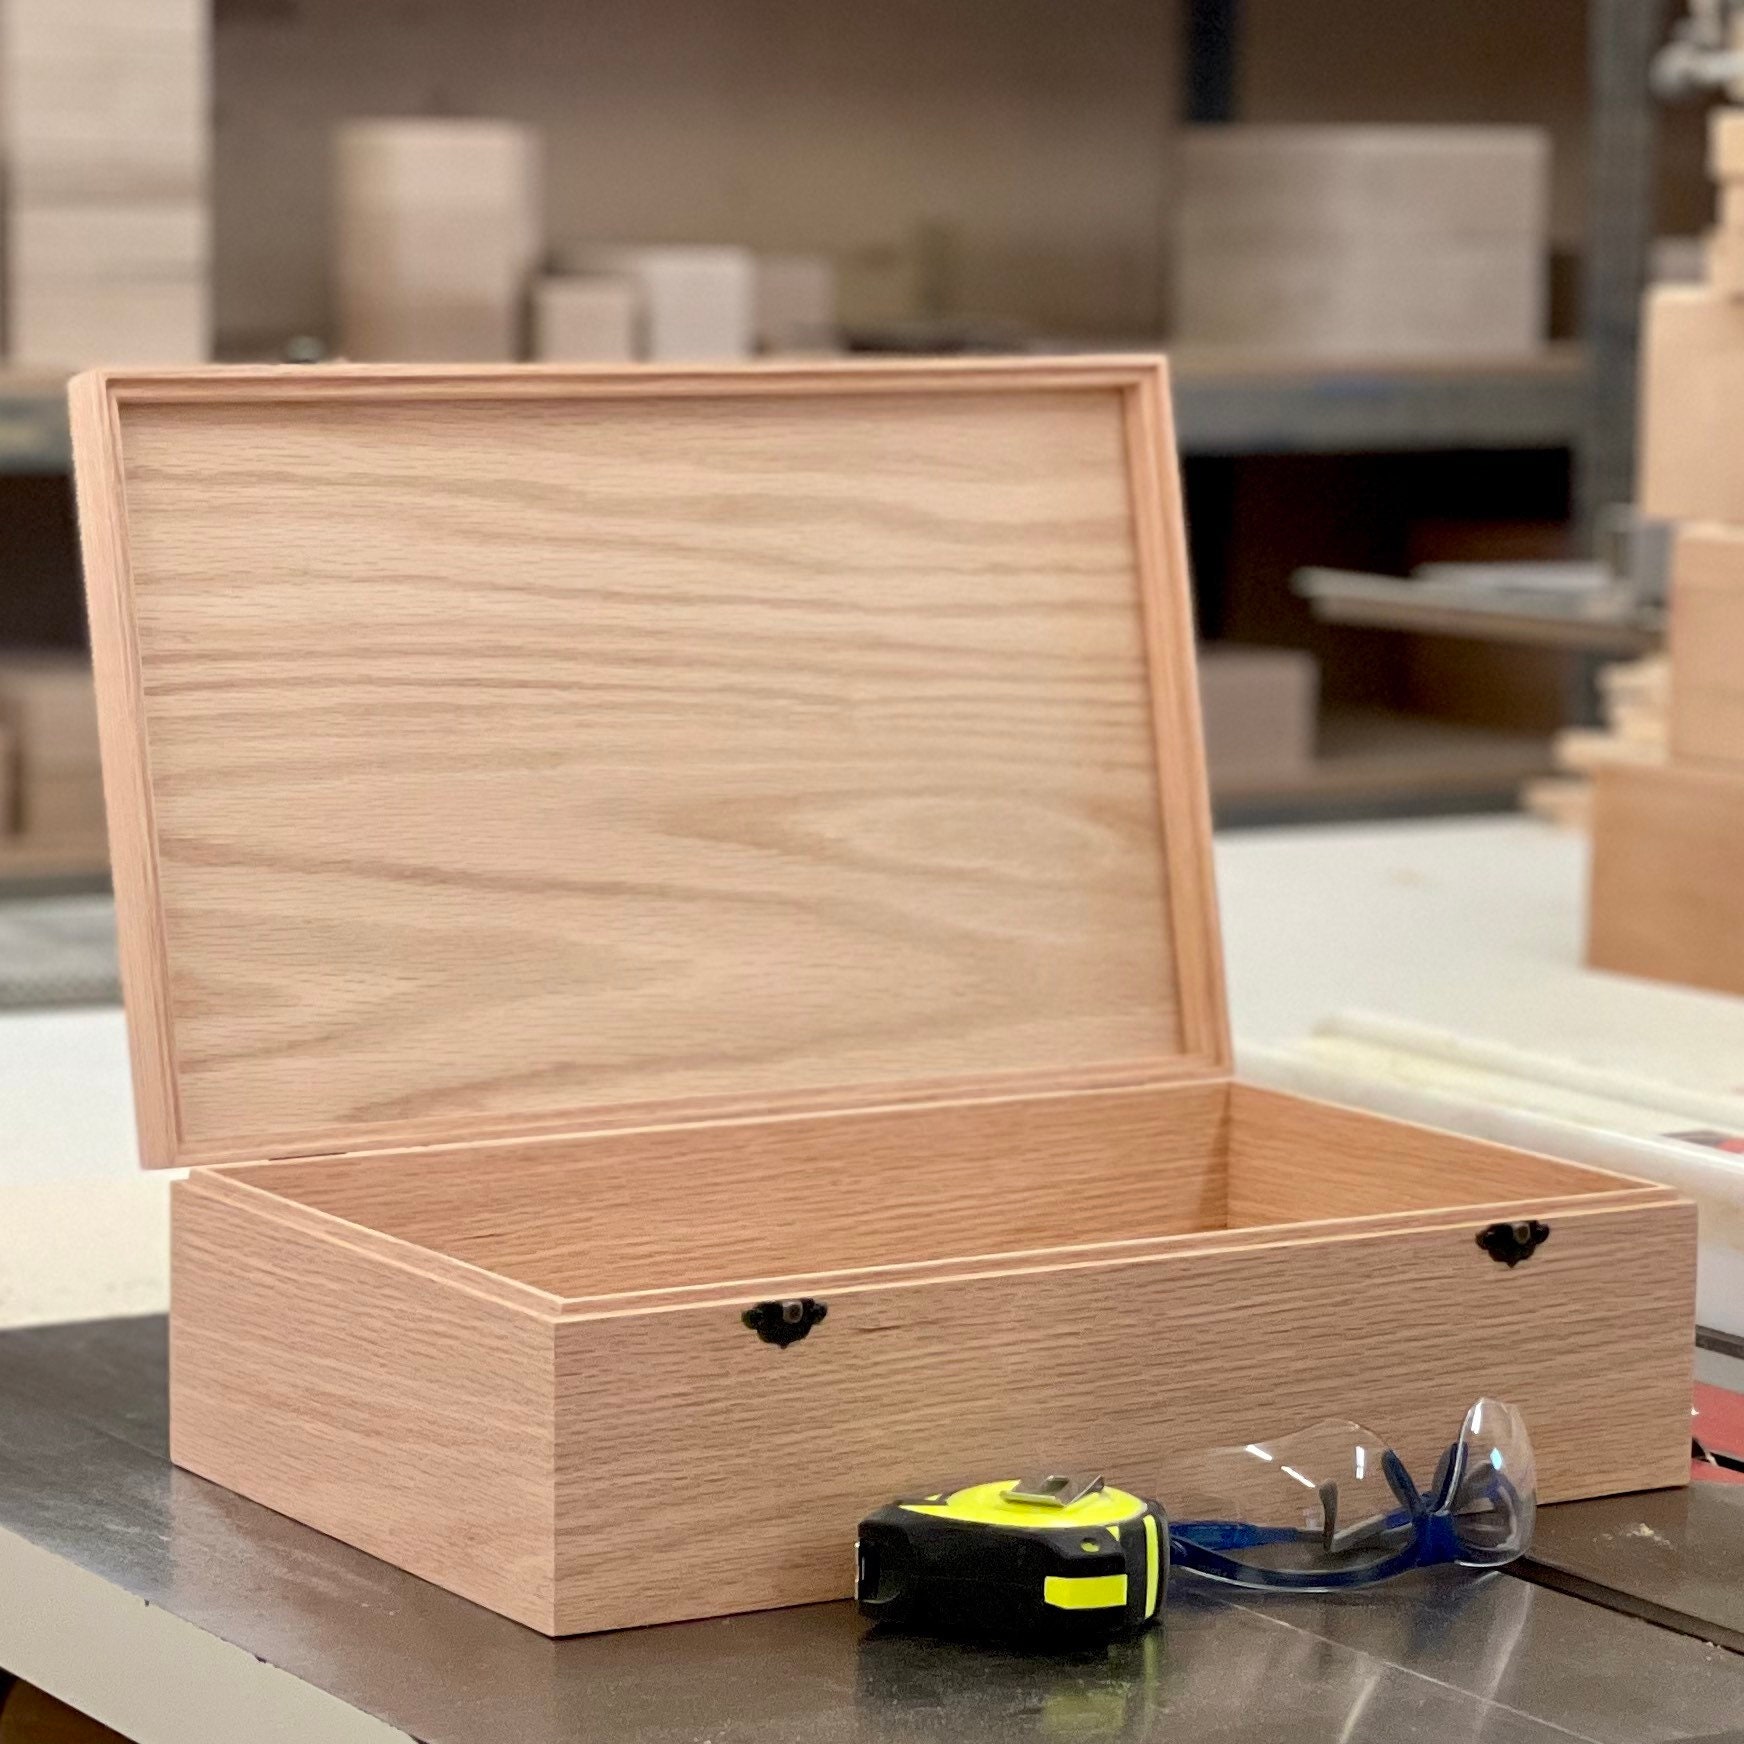 XXLarge Wooden Decorative Box With Lid Storage Chest Keepsake Craft  Decoupage